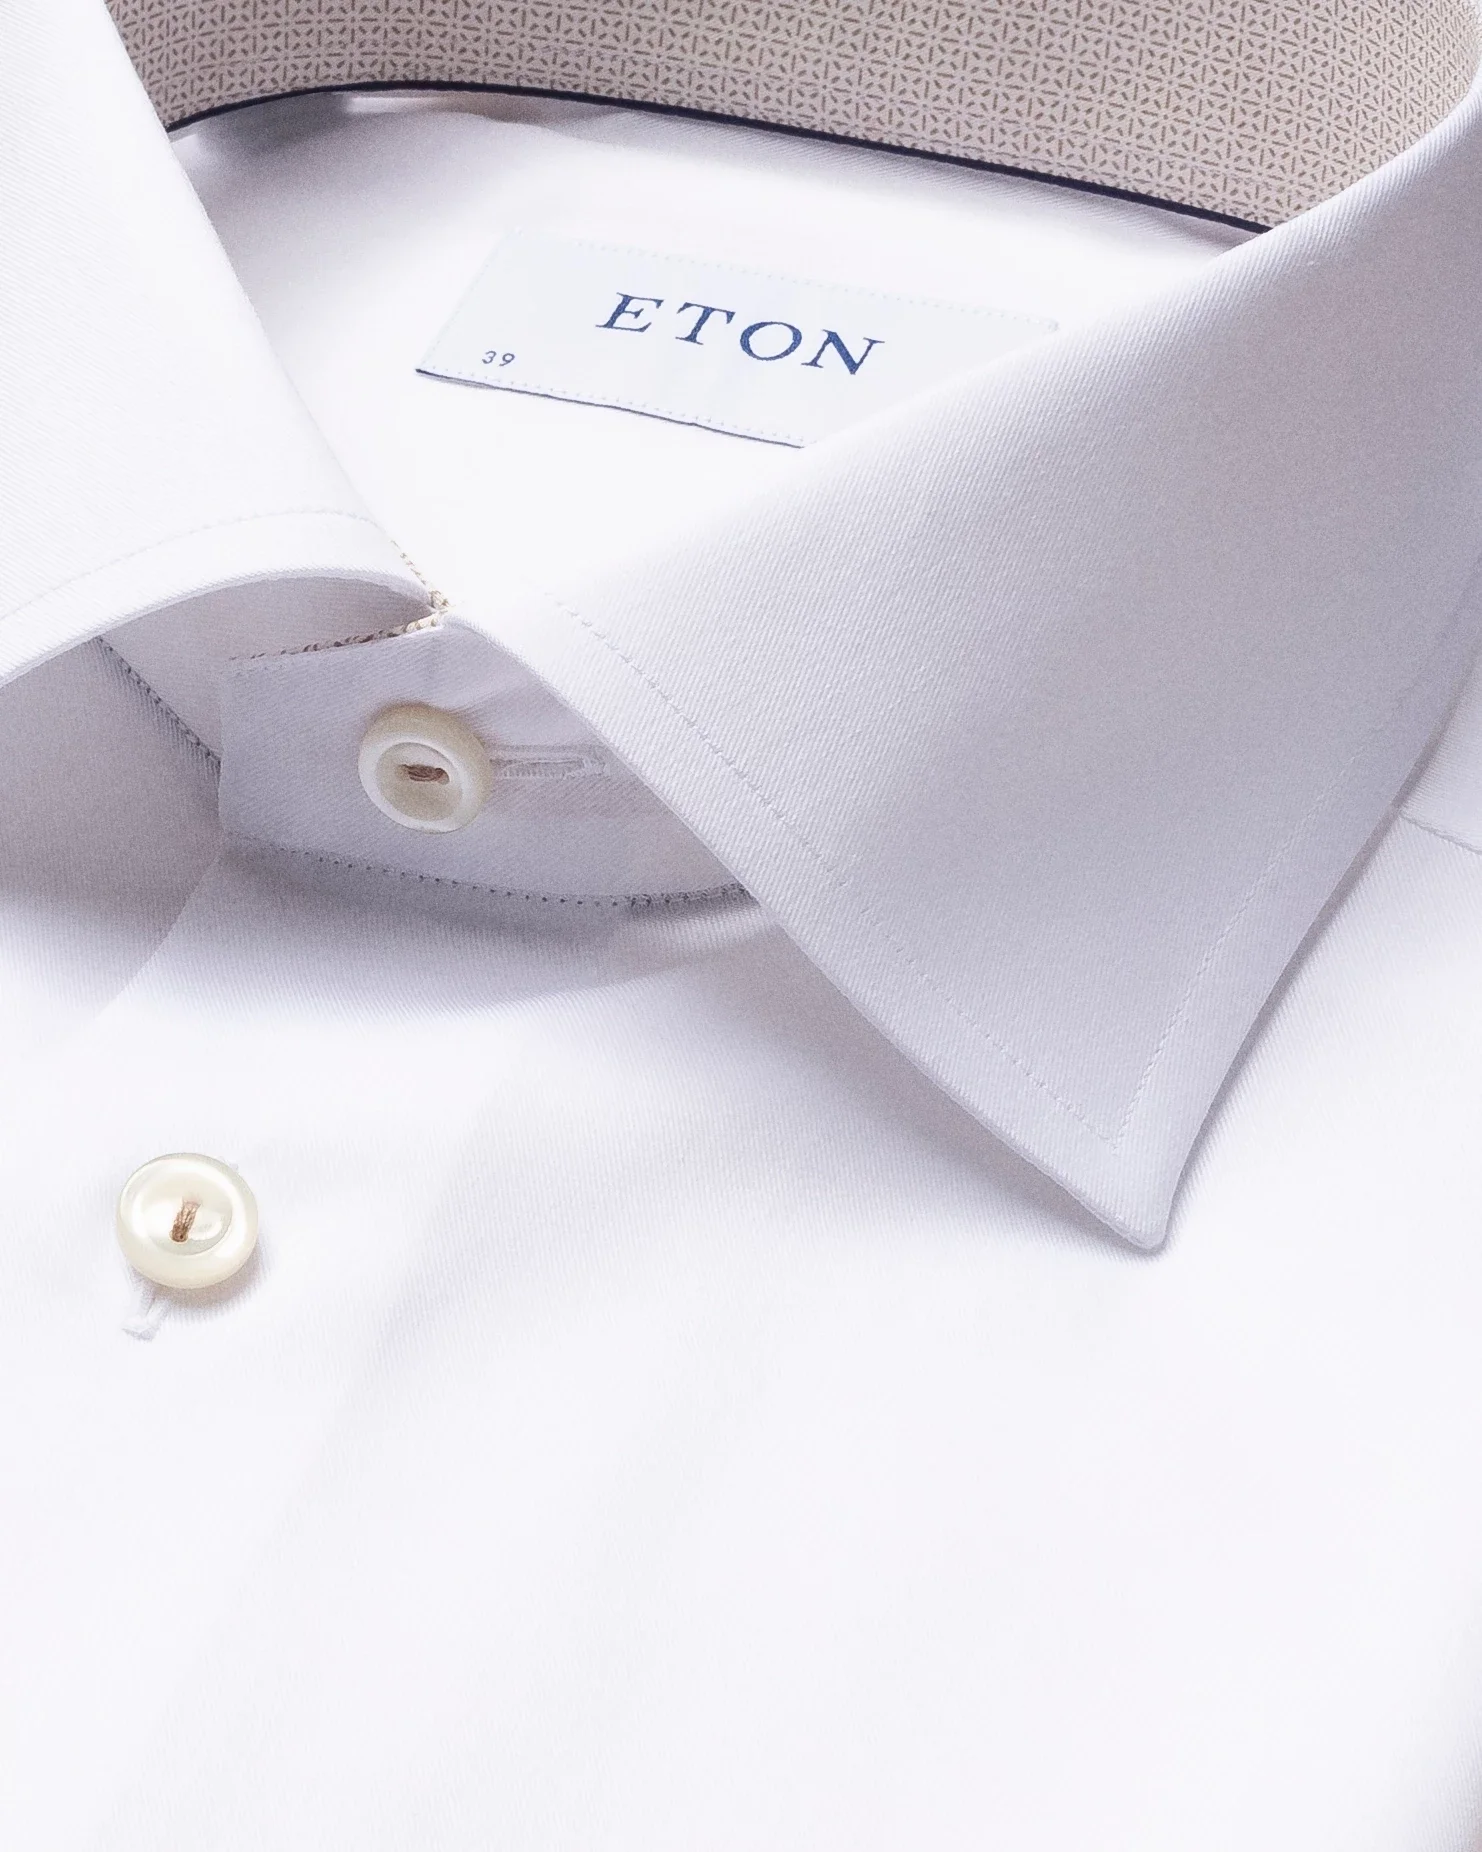 Eton - white lightweight twill shirt geometric details